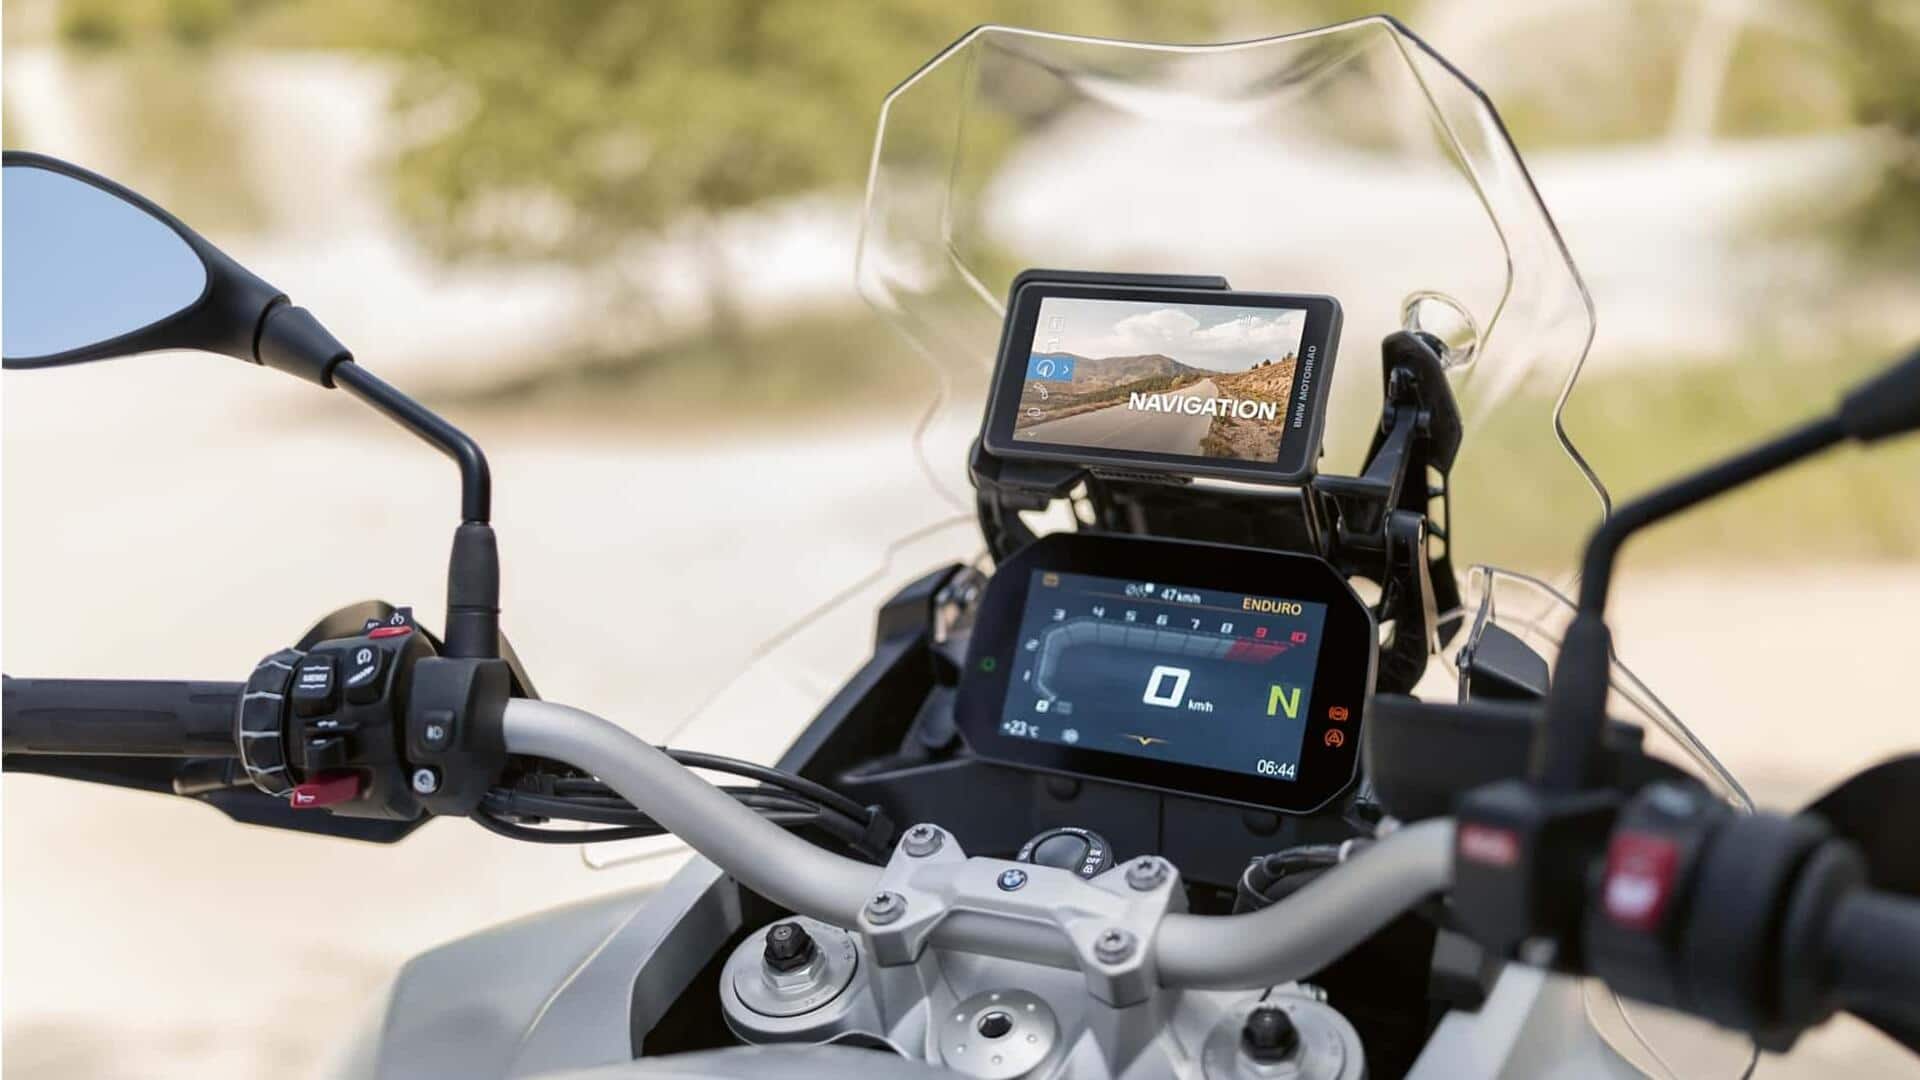 BMW Motorrad introduces a new ConnectedRide Navigator unit